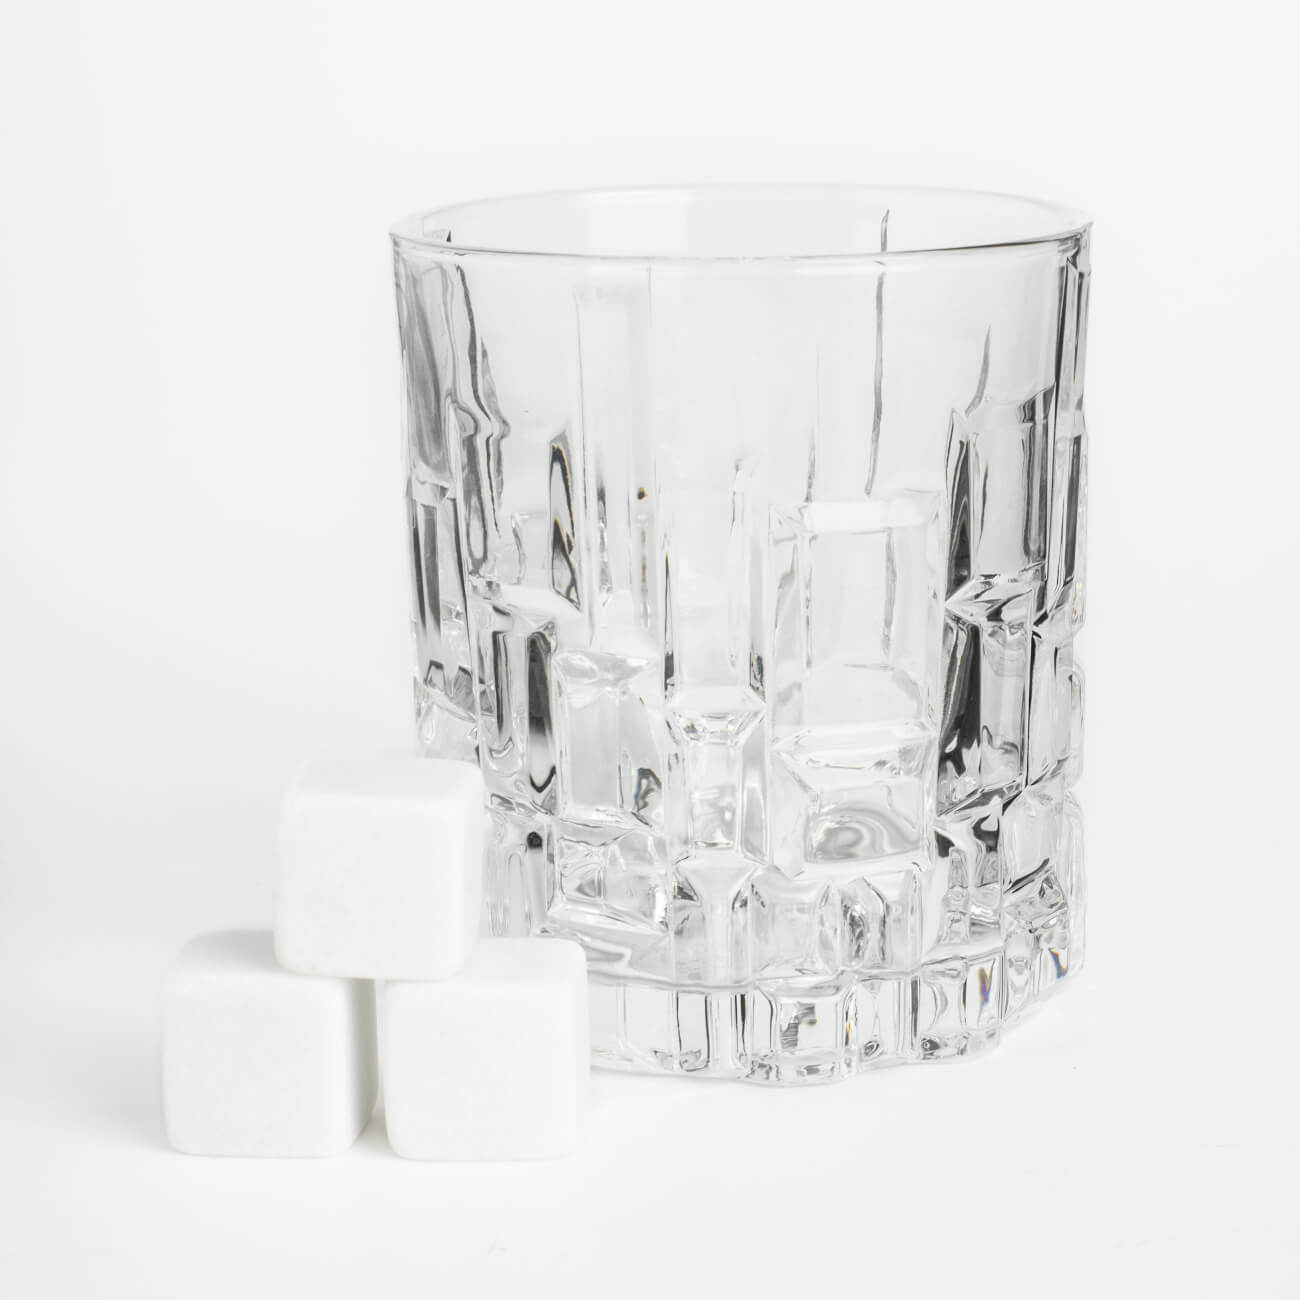 Набор для виски, 1 перс, 4 пр, стакан/кубики, стекло Р/мрамор, Mosaic набор для виски 1 перс 5 пр в коробке стакан кубики подставка стекло мрамор сланец bar